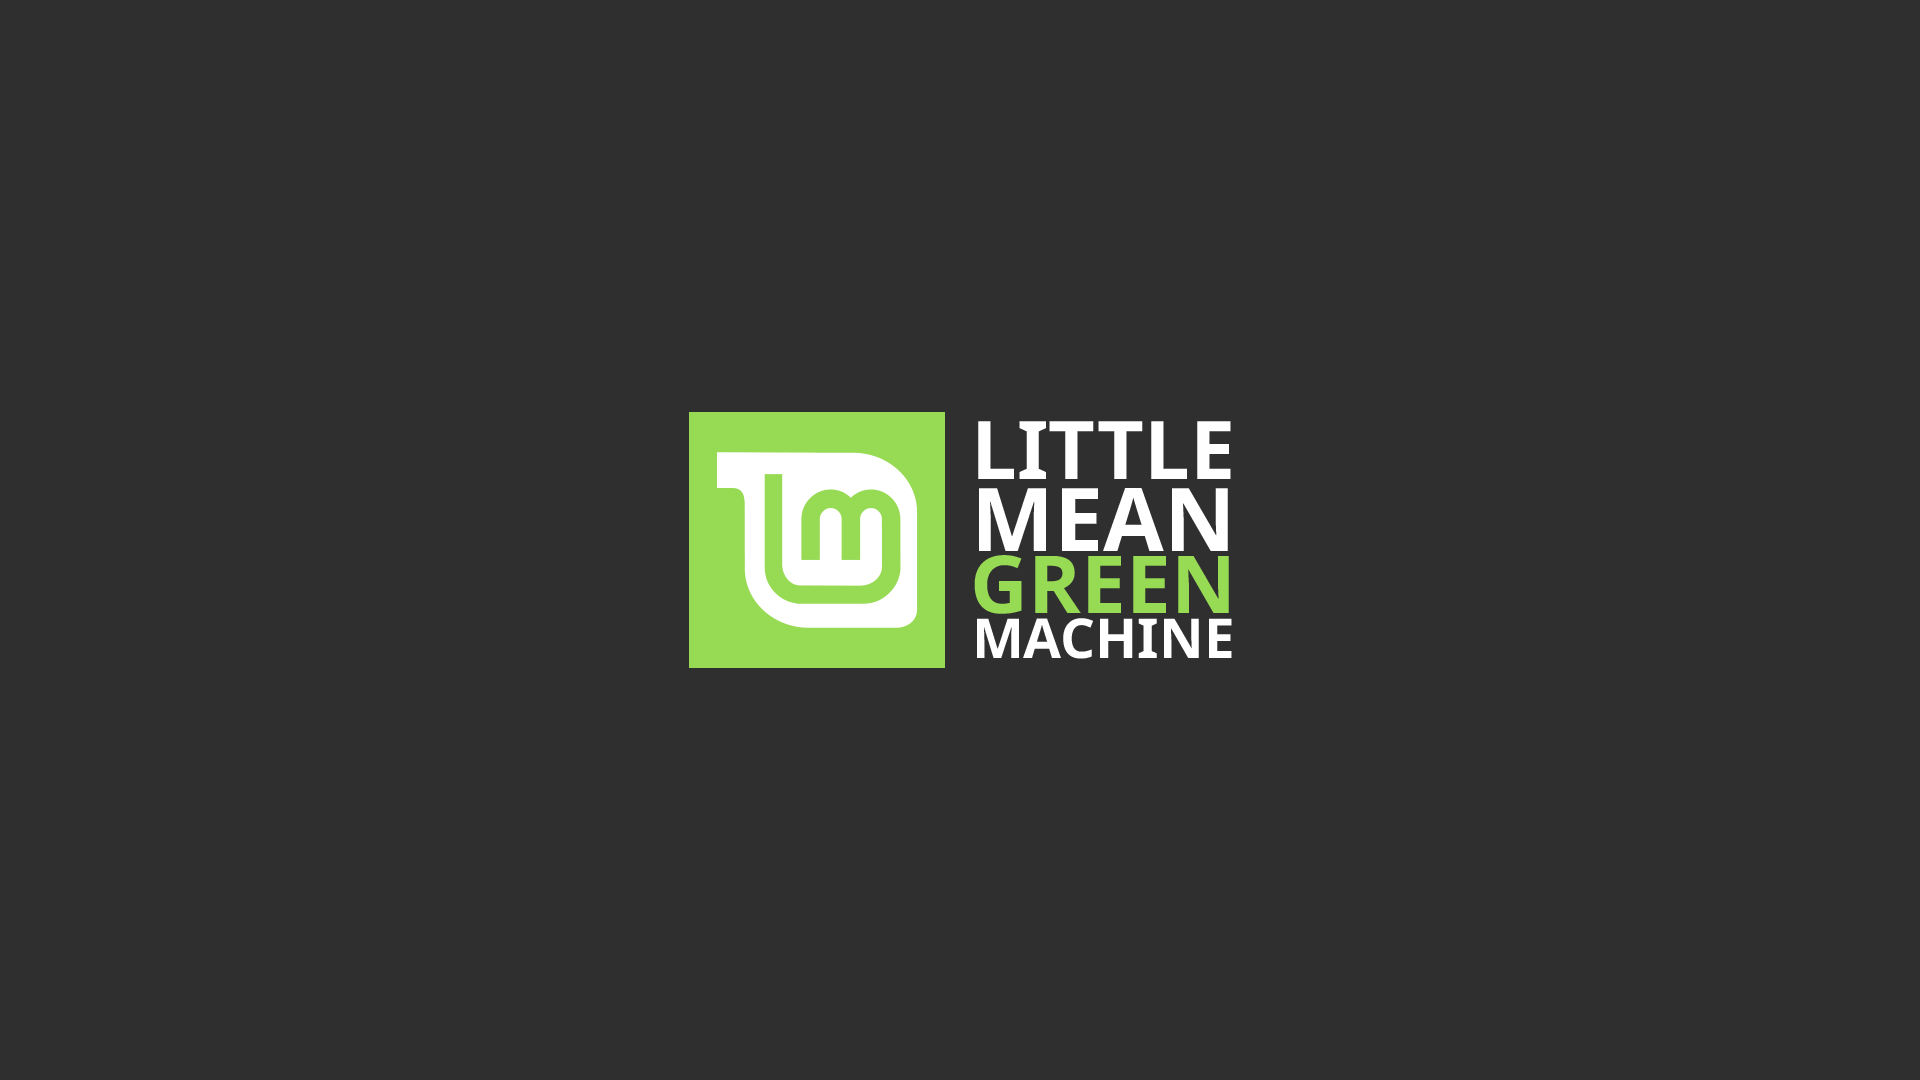 Minimalist Linux Mint Wallpaper (Little Mean Green Machine)